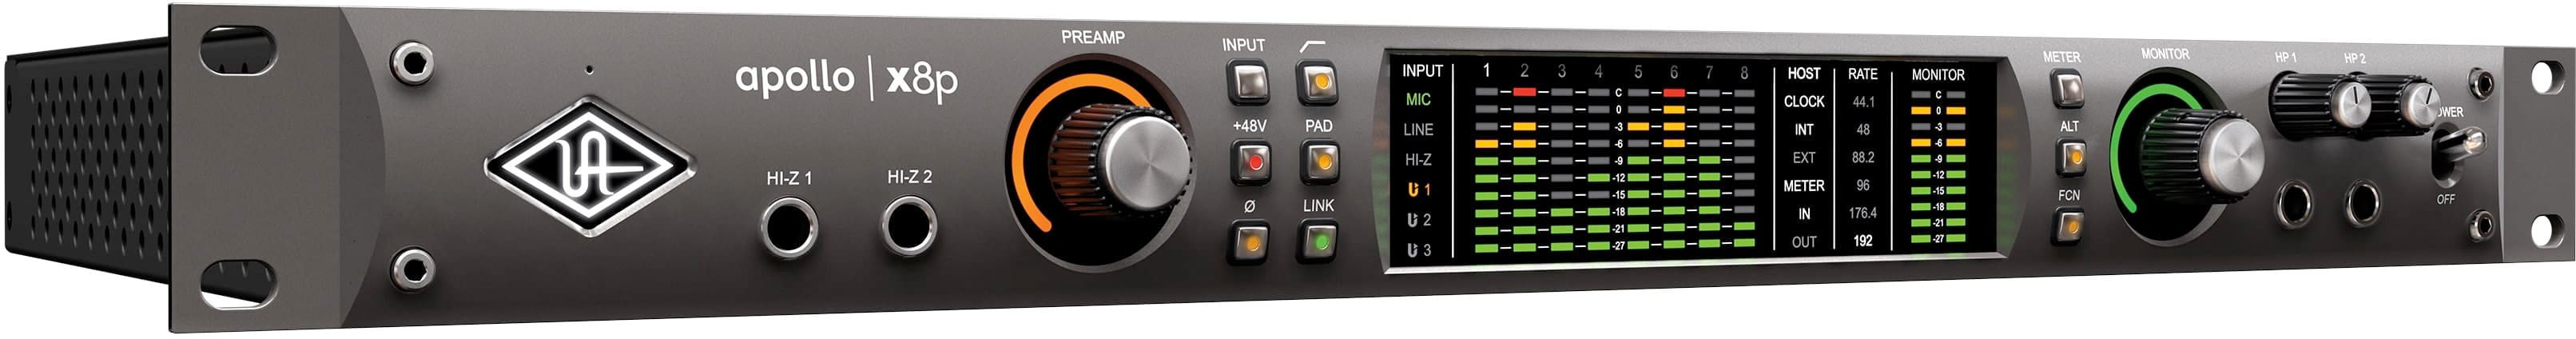 Universal Audio Apollo X8p - Interface de audio thunderbolt - Main picture